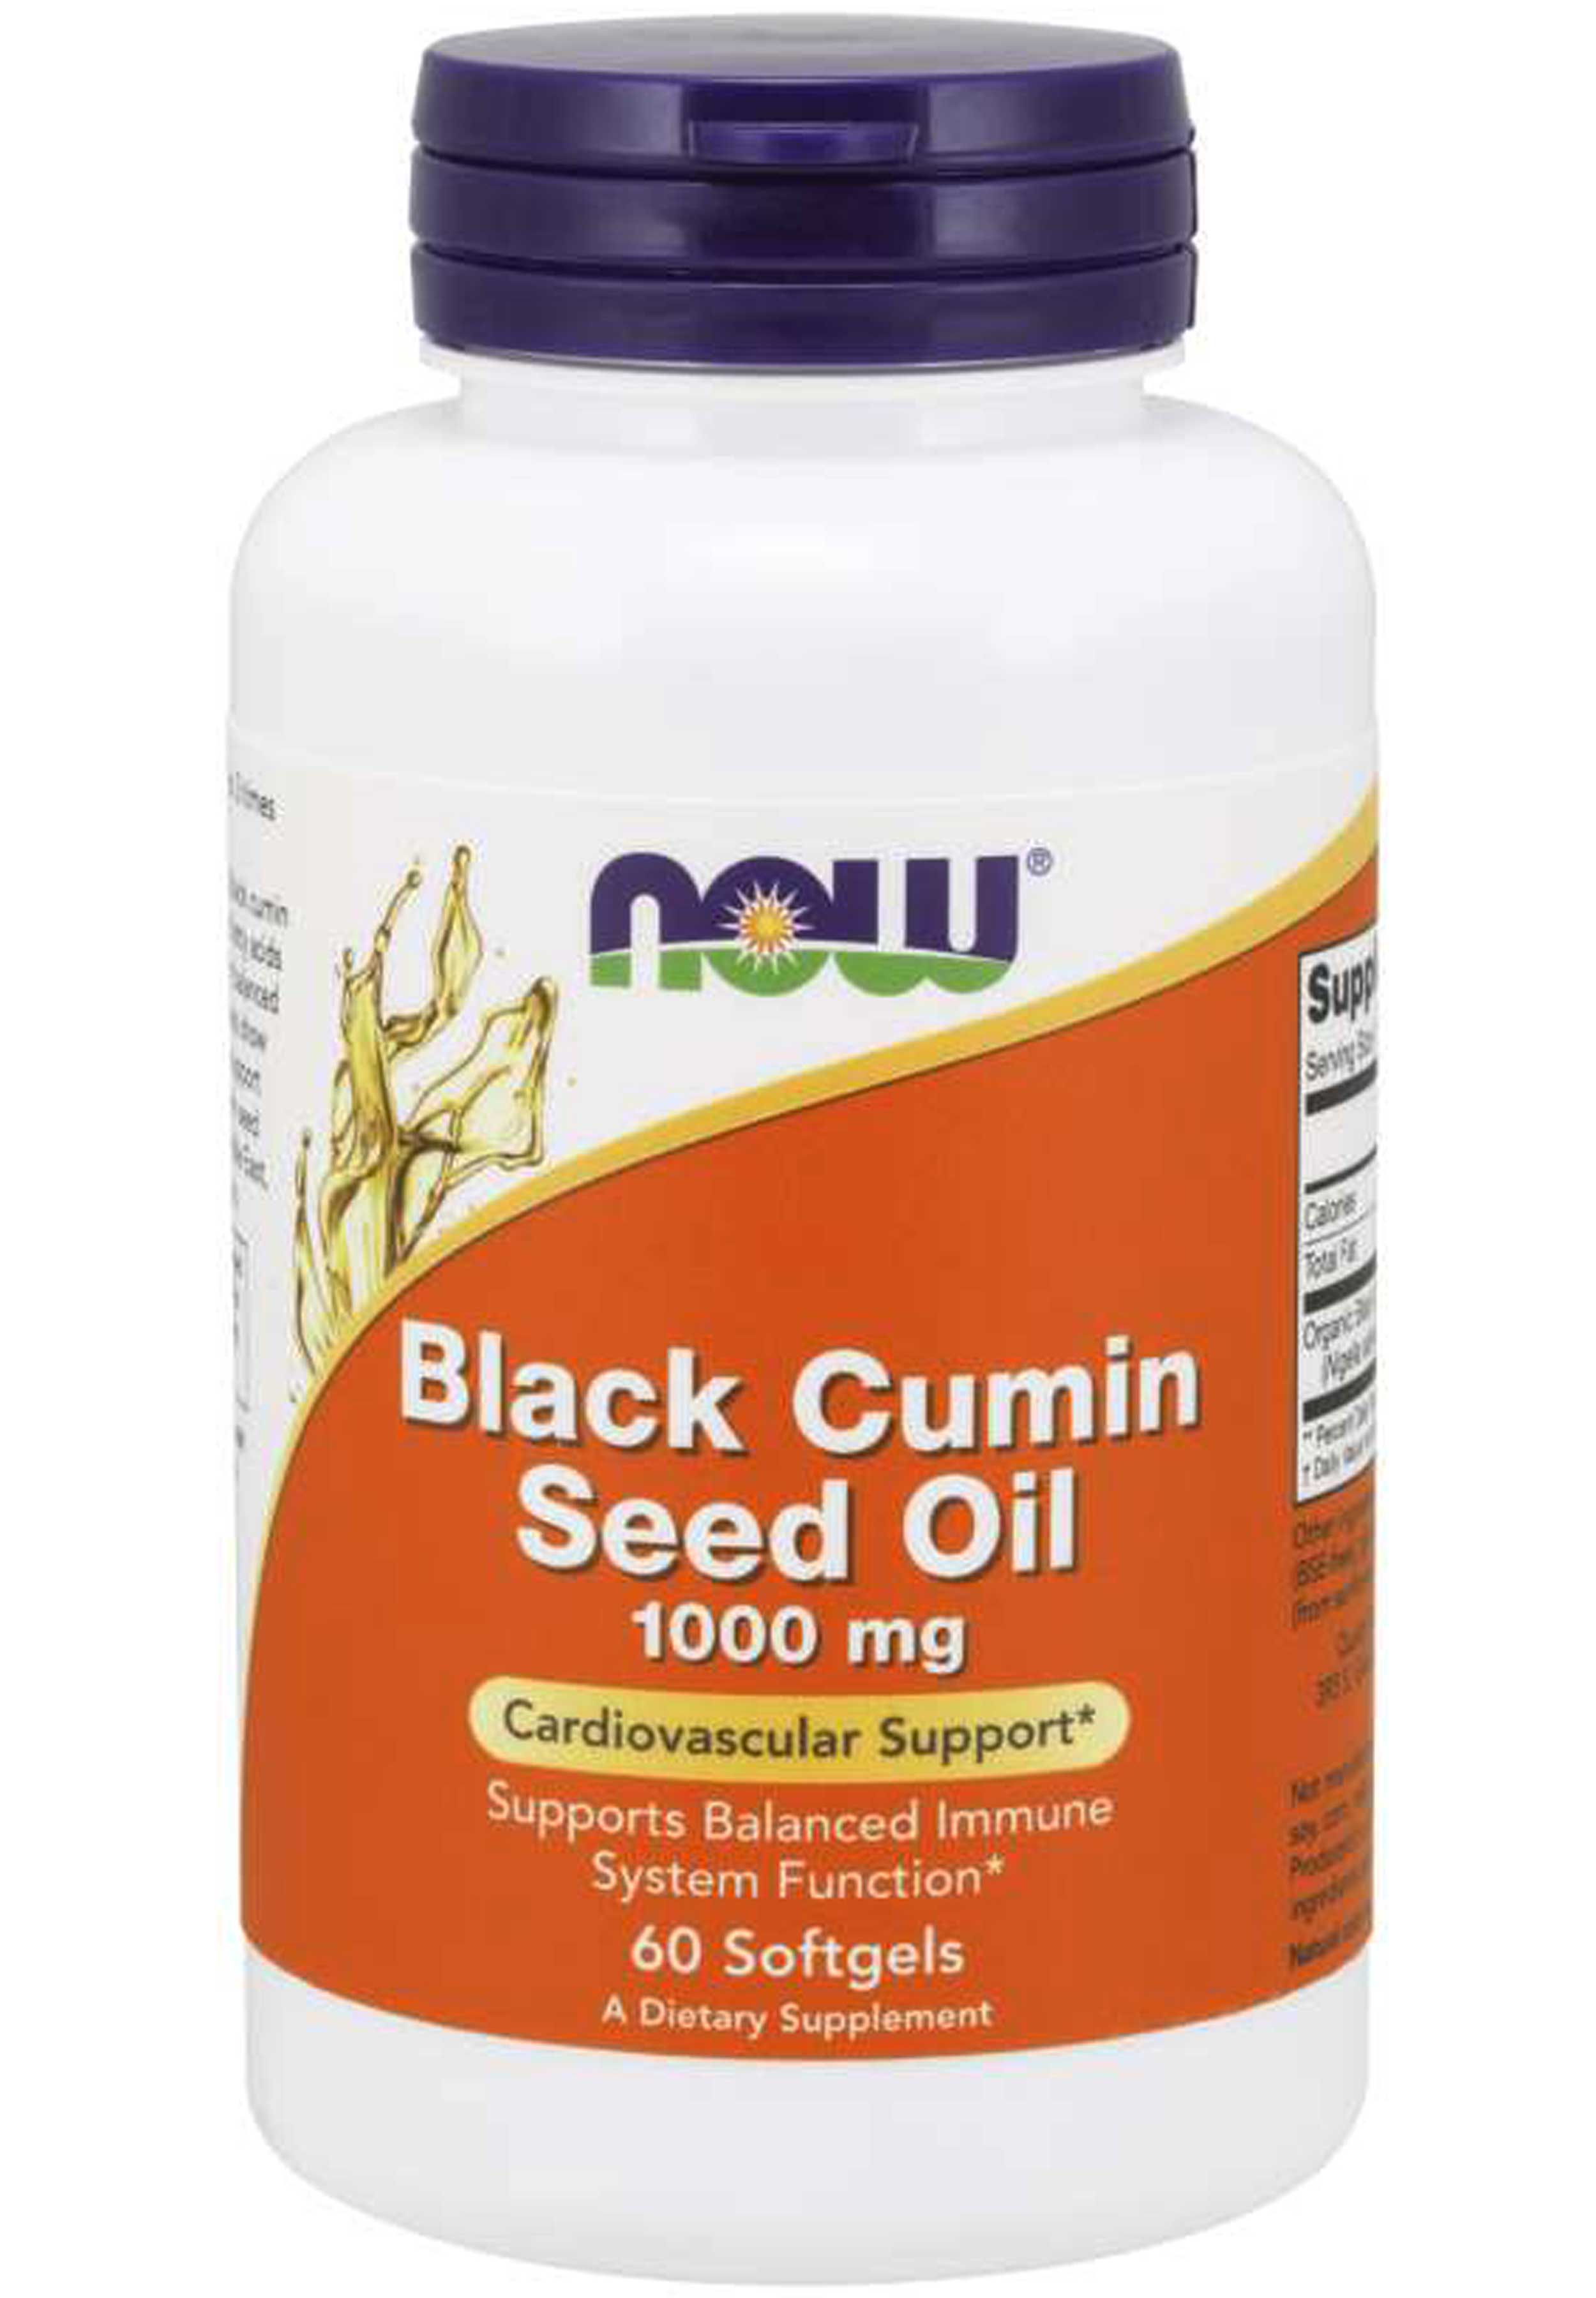 NOW Black Cumin Seed Oil 1000 mg